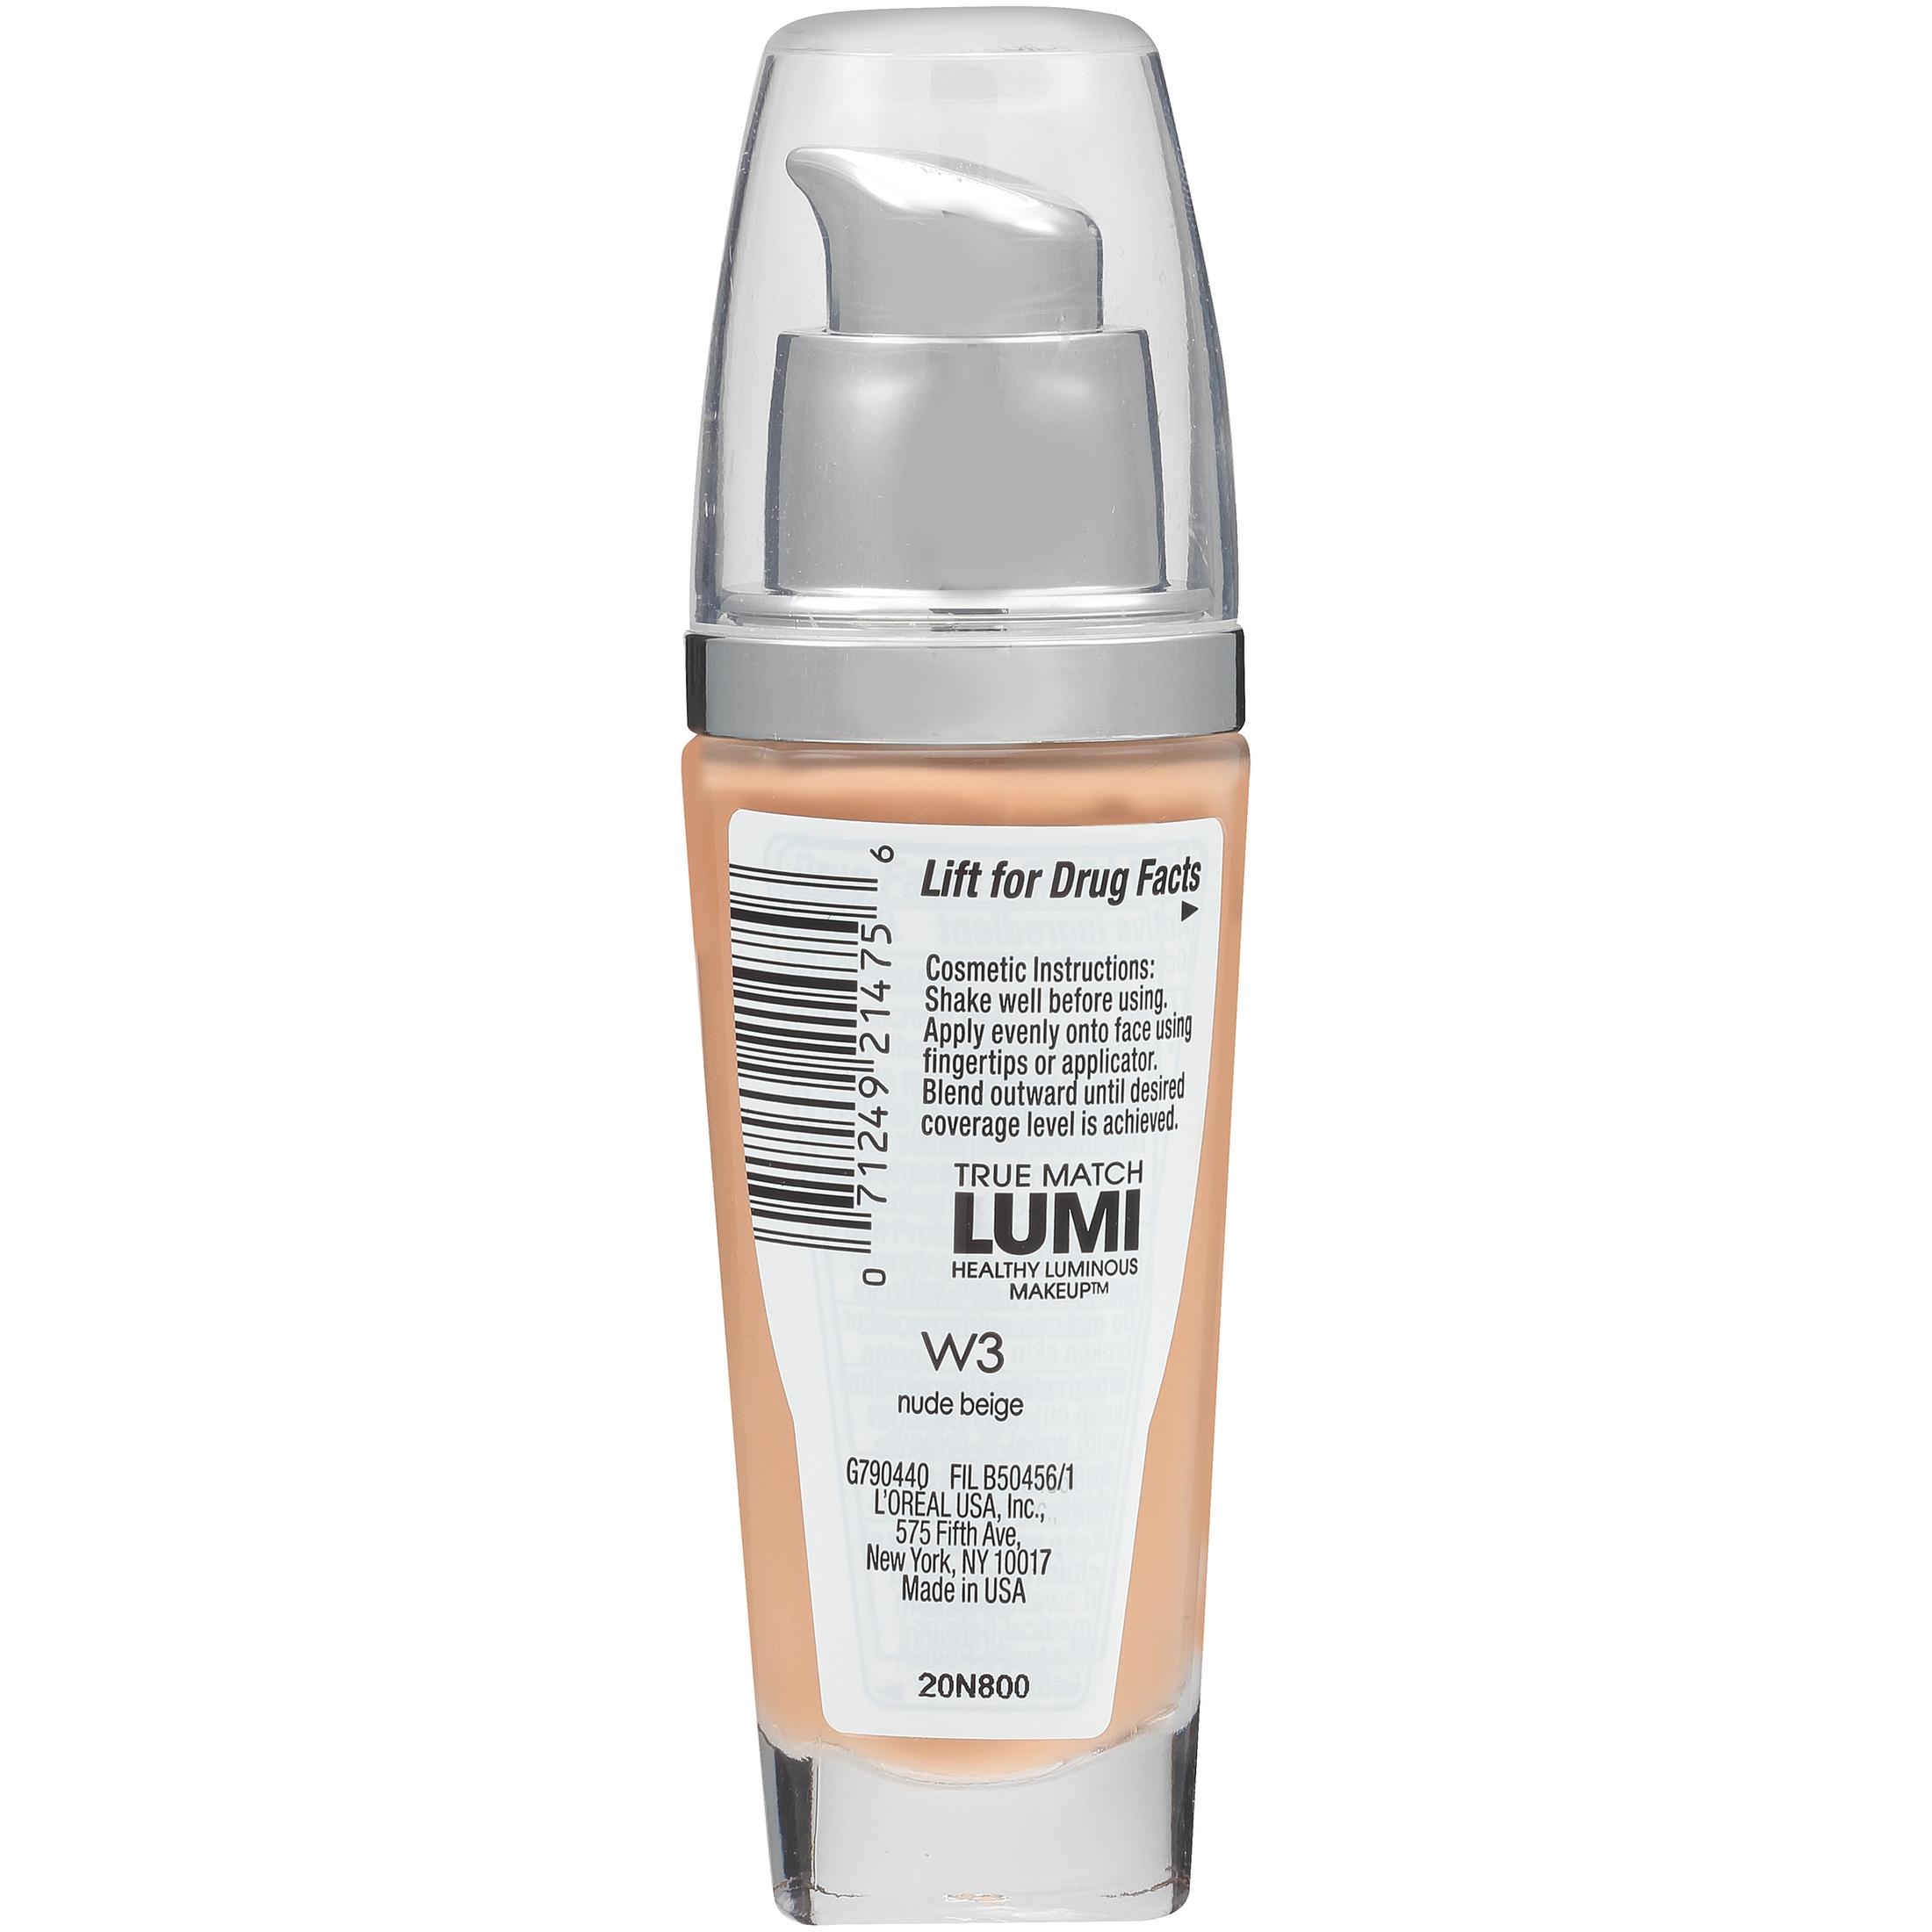 L'Oreal Paris True Match Lumi Liquid Foundation Makeup, W3 Nude Beige, 1 fl oz - image 2 of 10